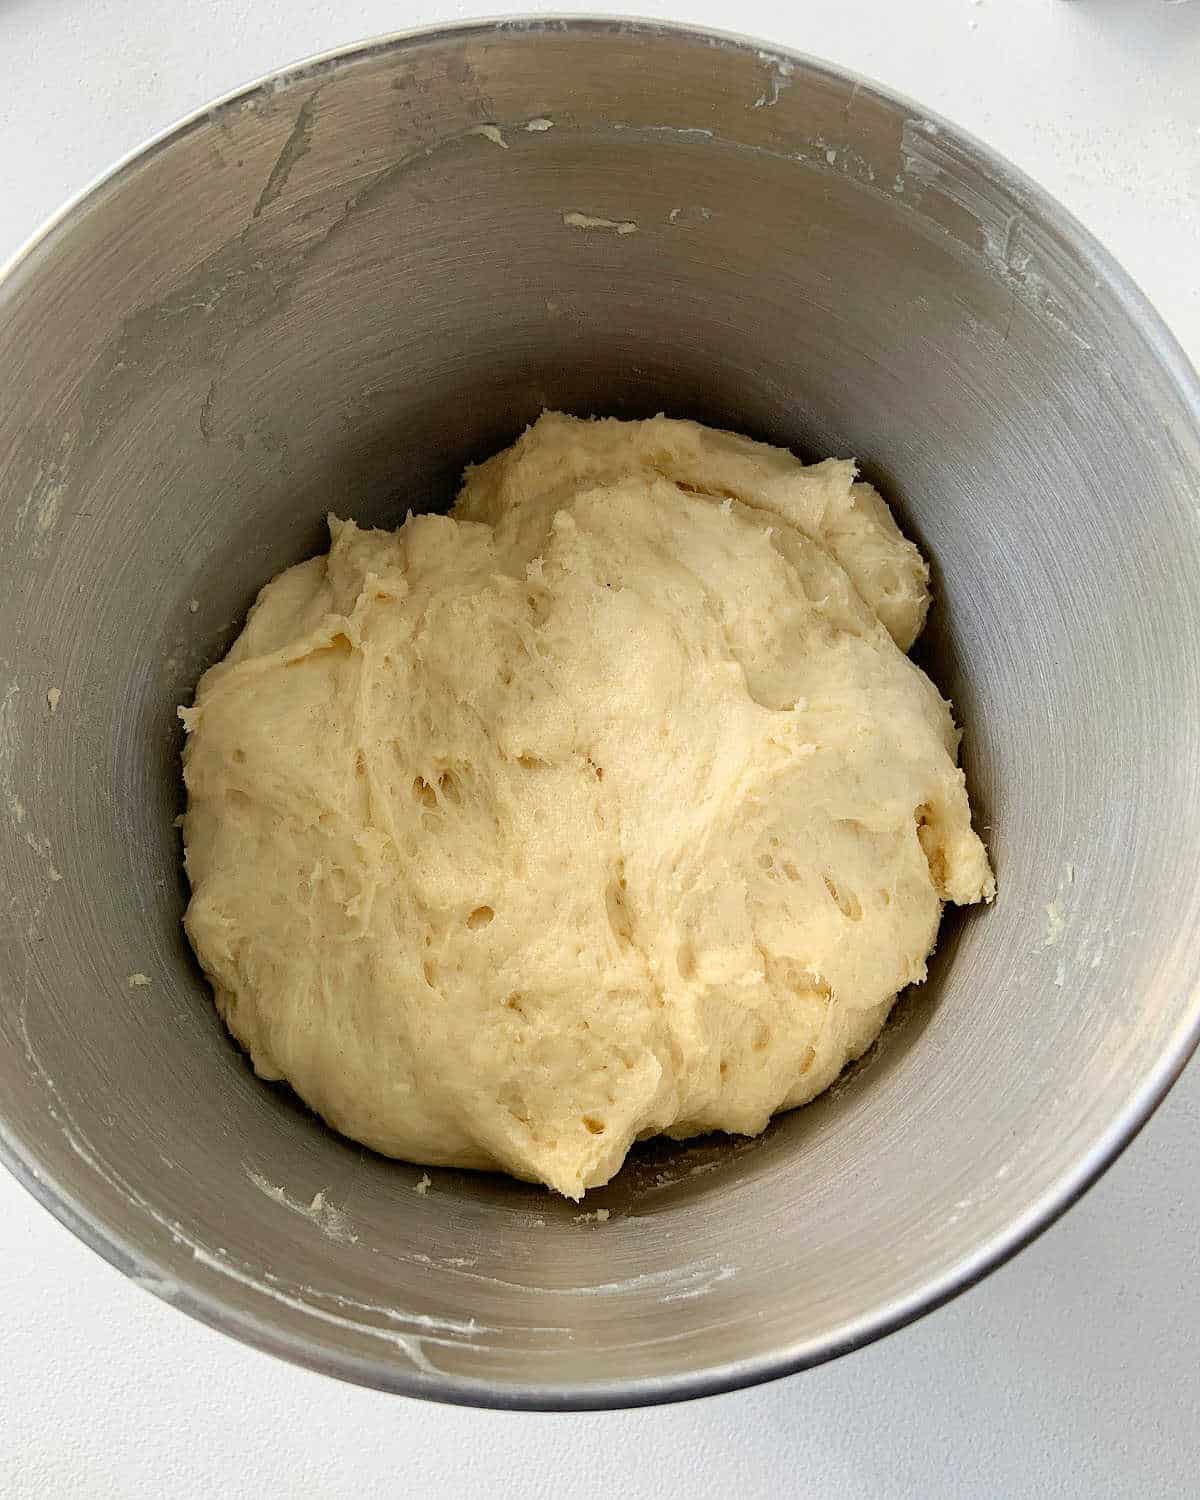 Top view of Pandoro dough inside a metal bowl.